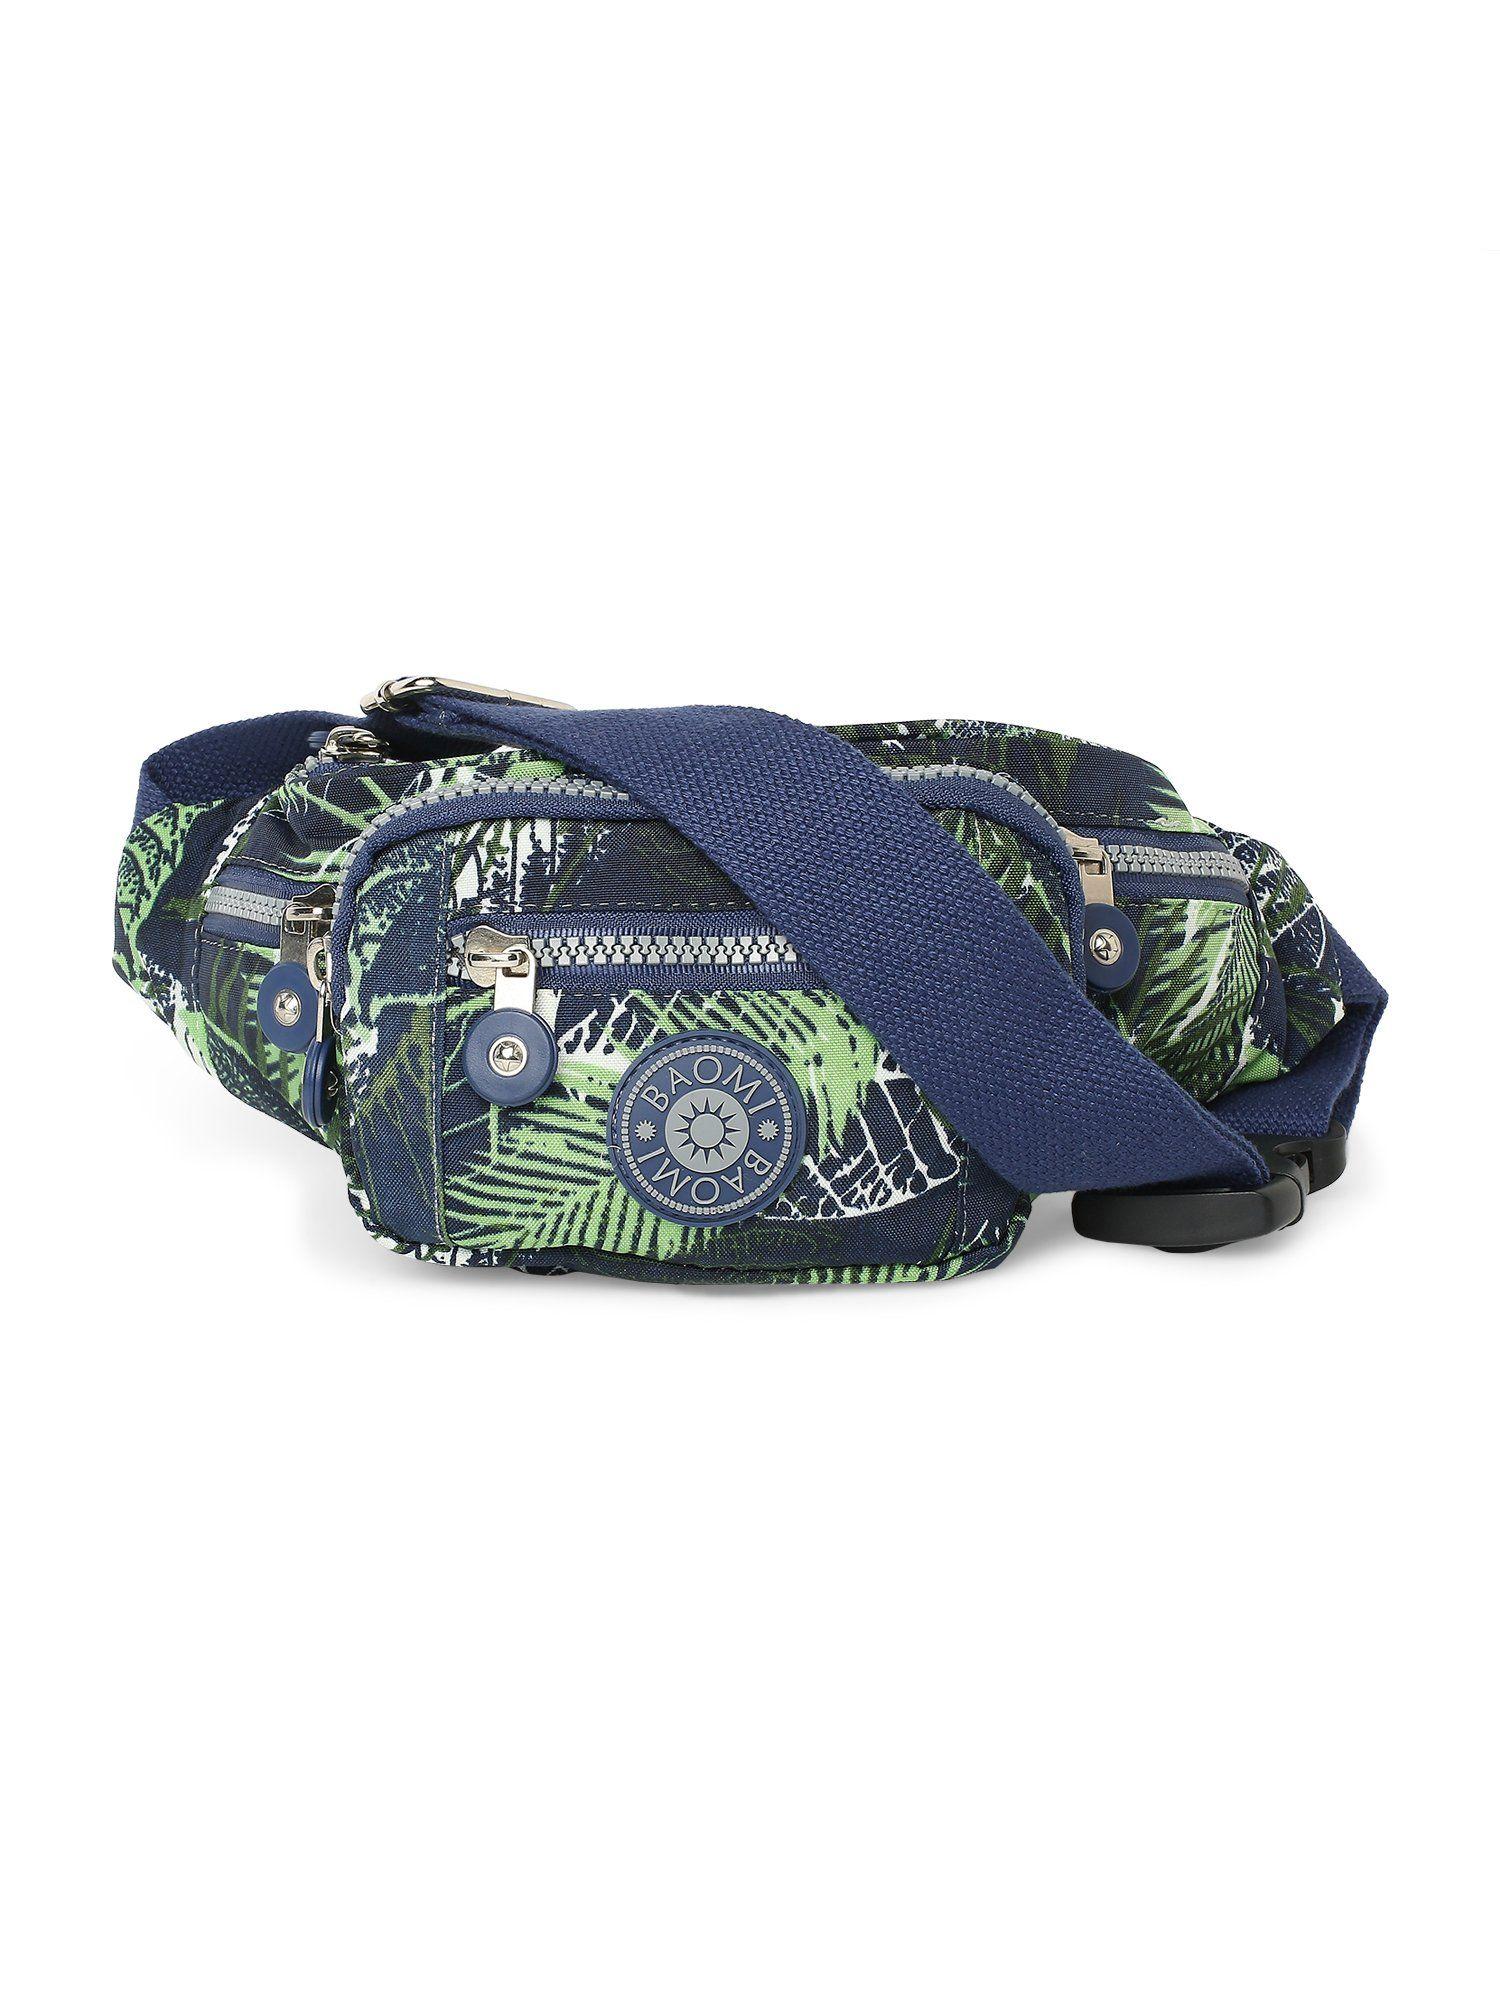 crinkle range blue & green color soft case nylon waist bag - ba-787041016